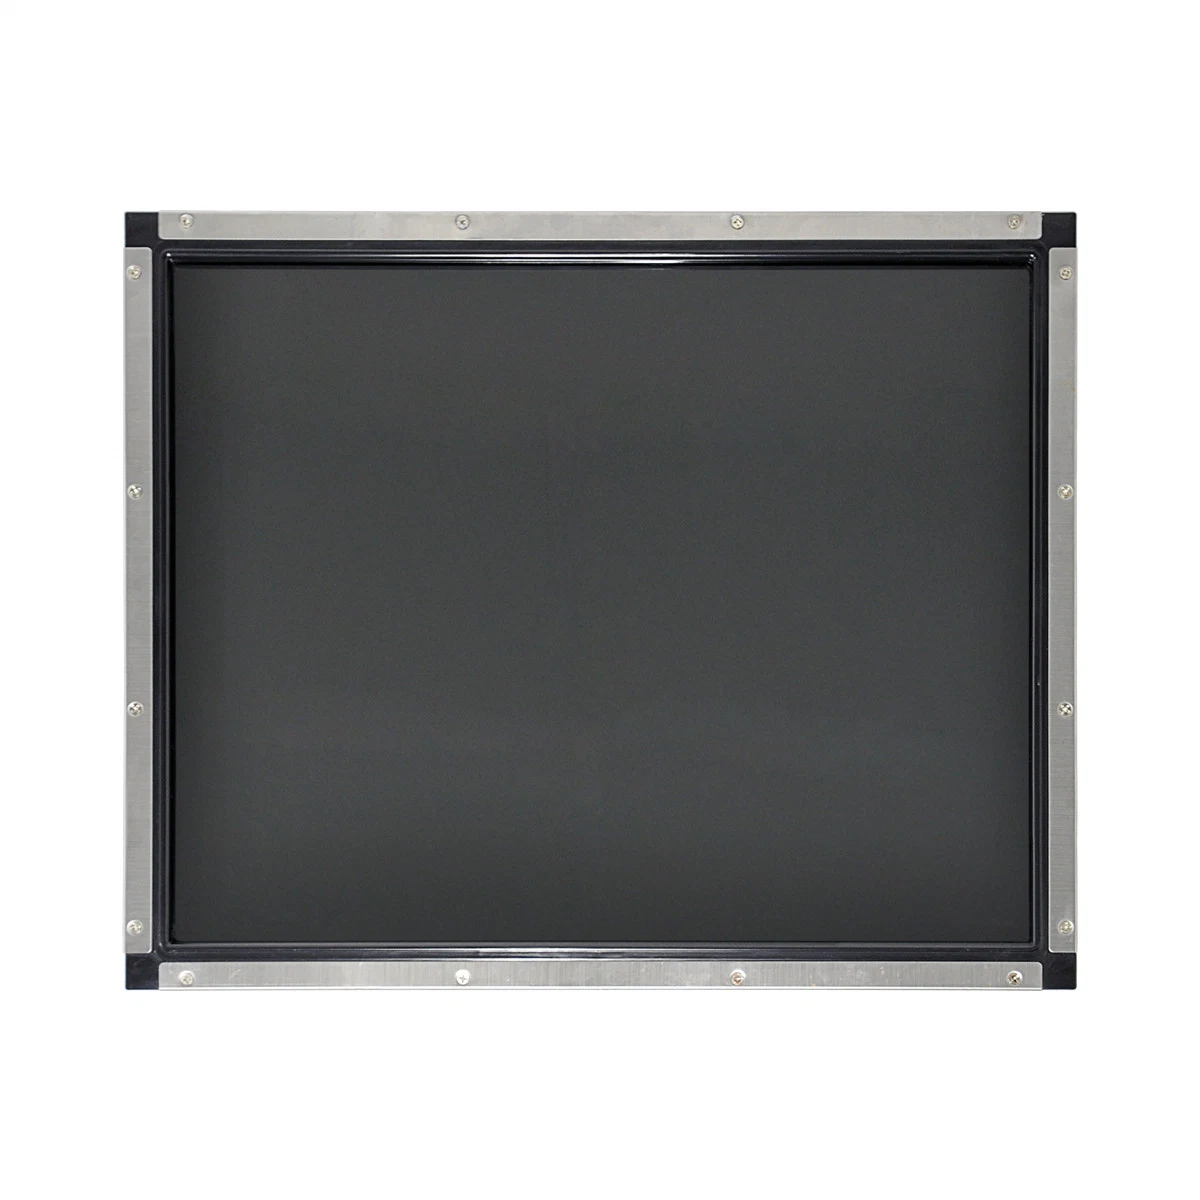 Elo compatible con pantalla LCD de 17" de 17" de bastidor abierto resistente al agua Et1739L Monitor de kiosco con pantalla táctil de infrarrojos Multi ir